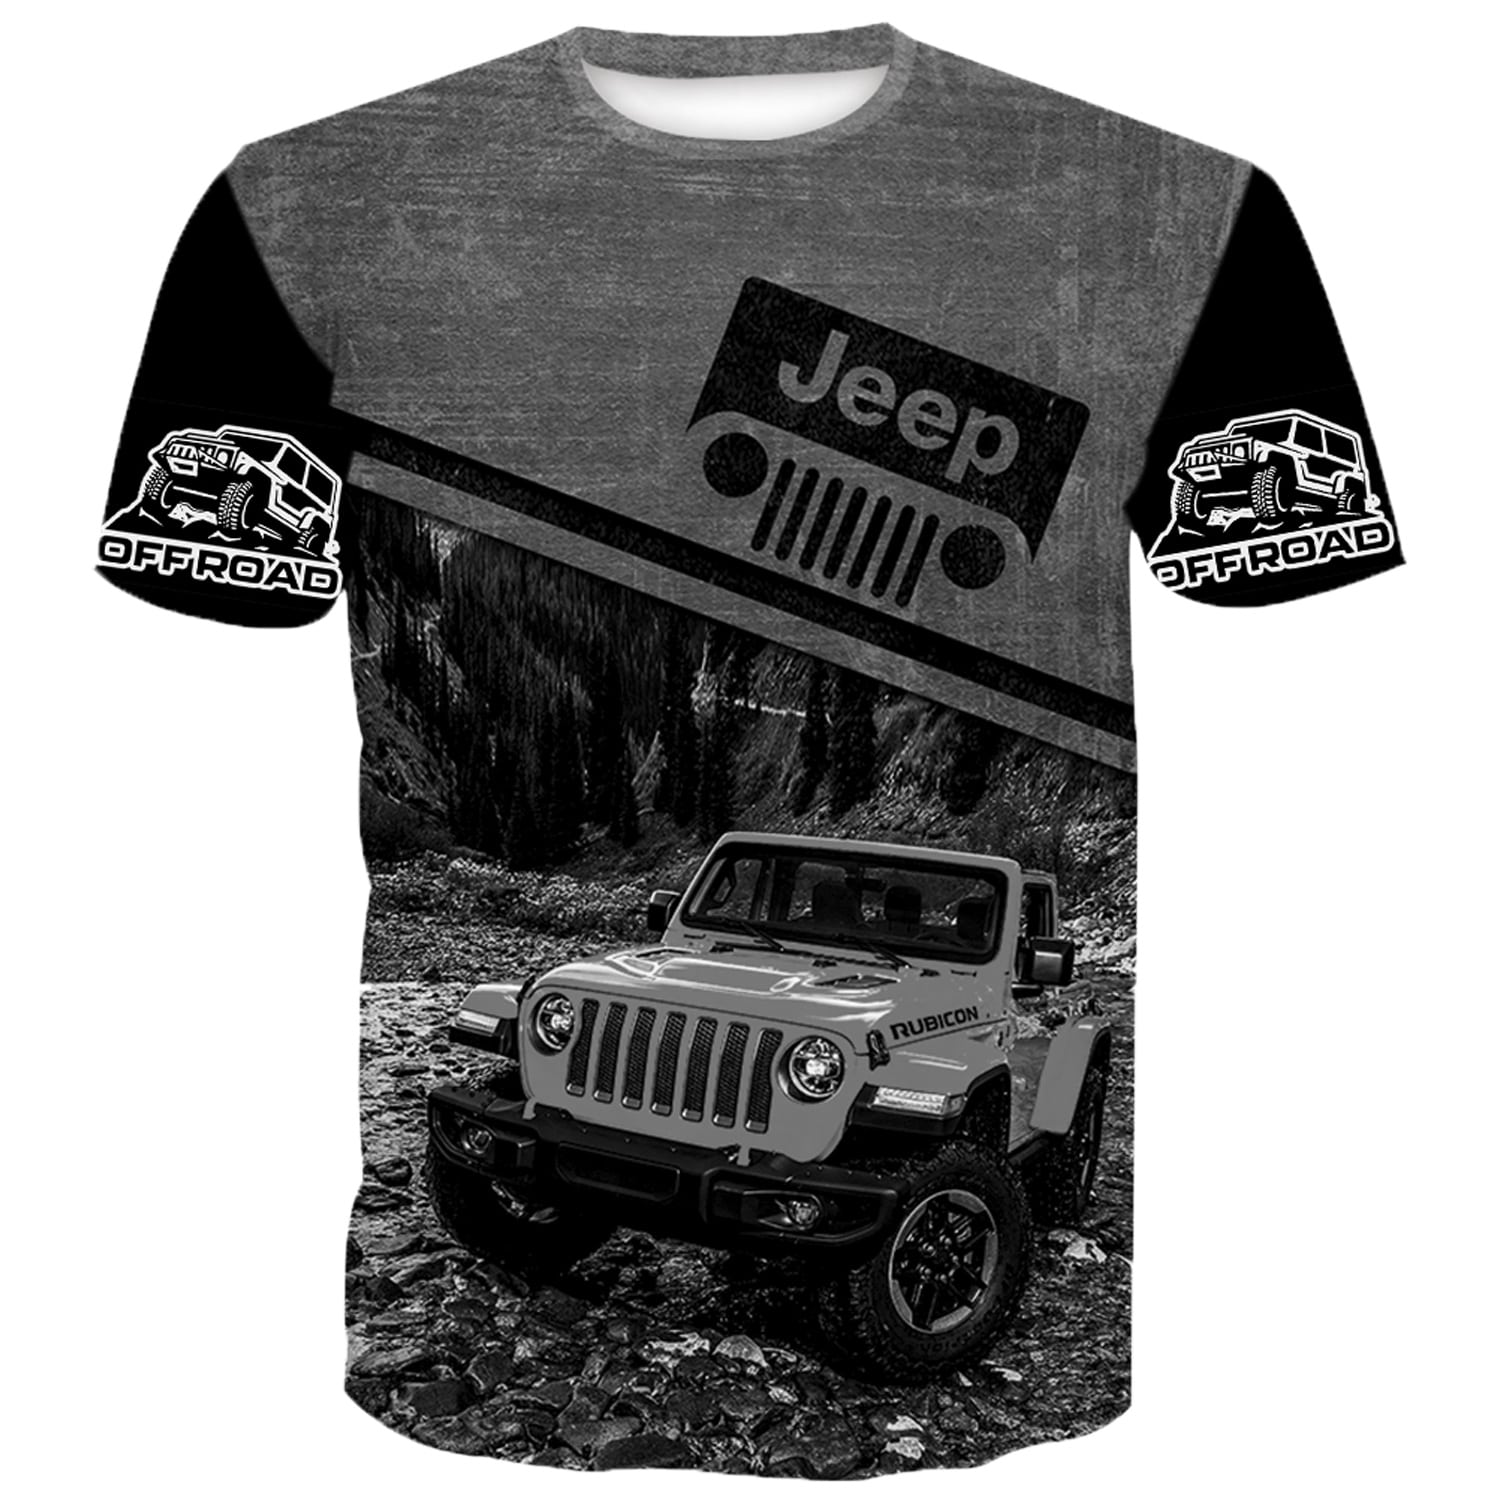 Off Road Jeep Shirt - Grey